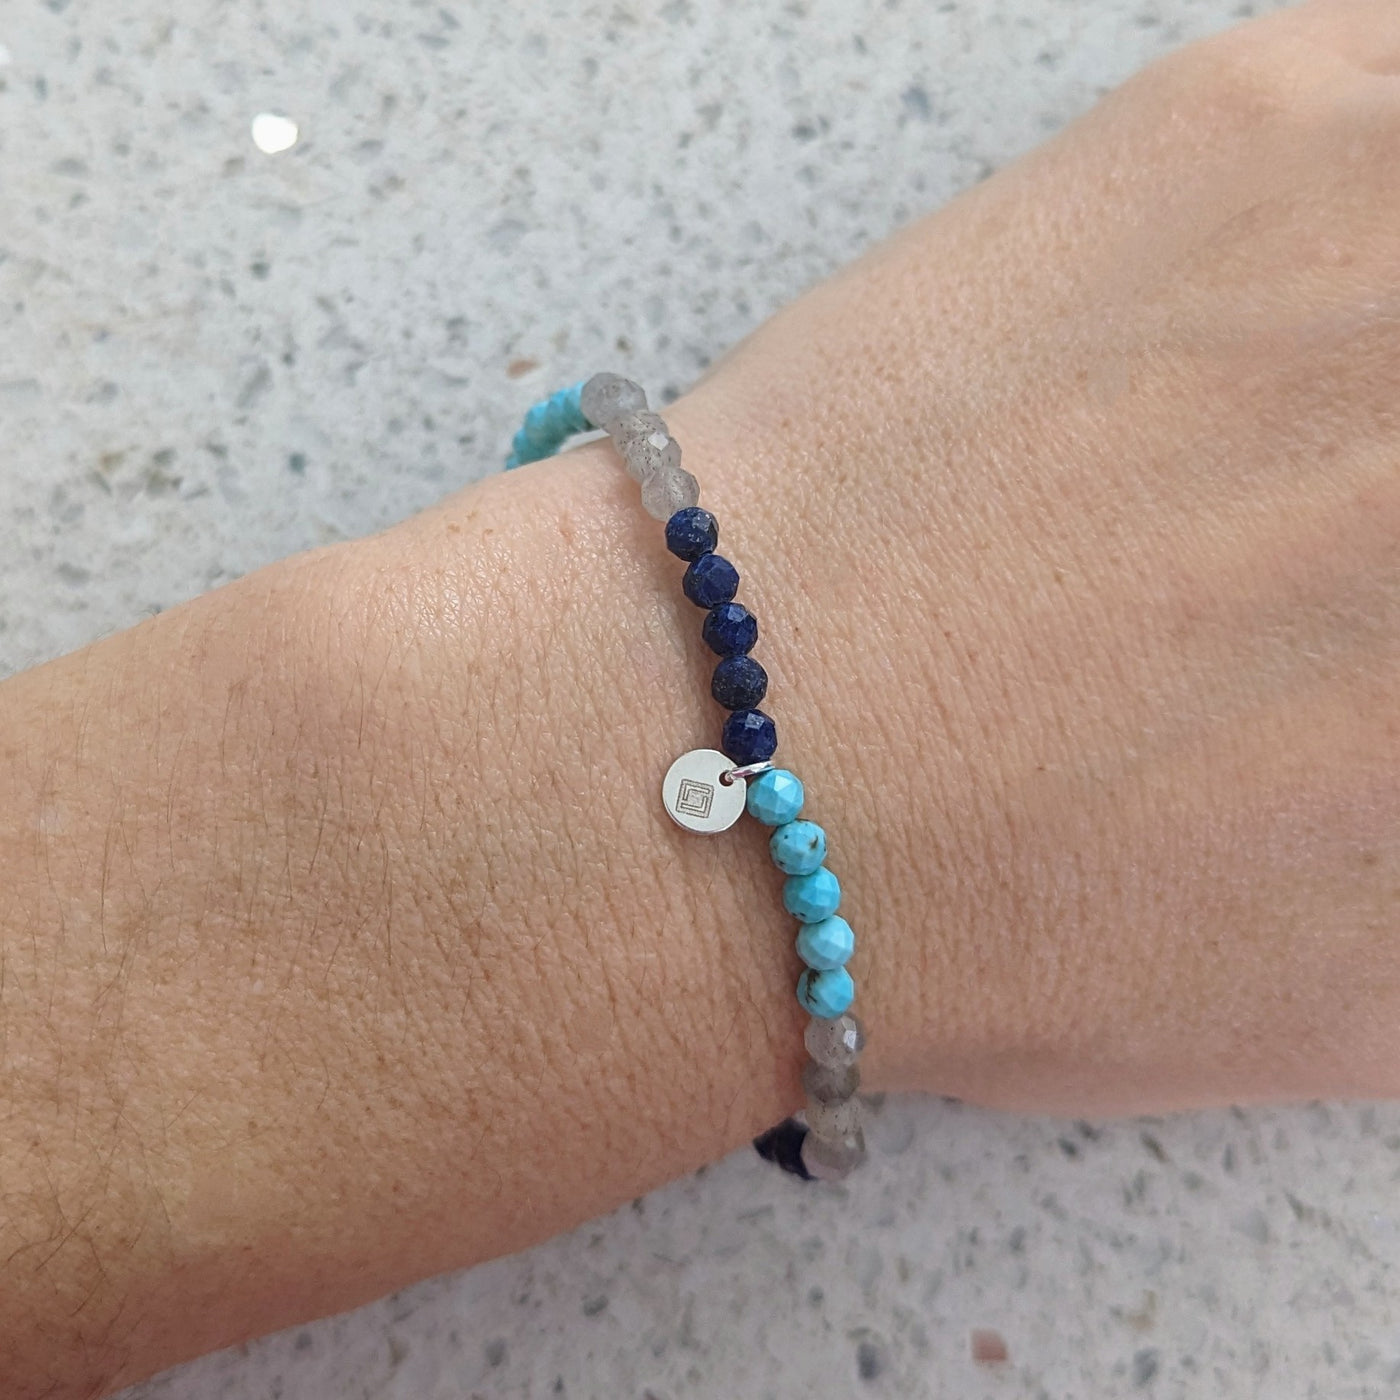 lapis lazuli, labradorite and turquoise gemstone bracelet